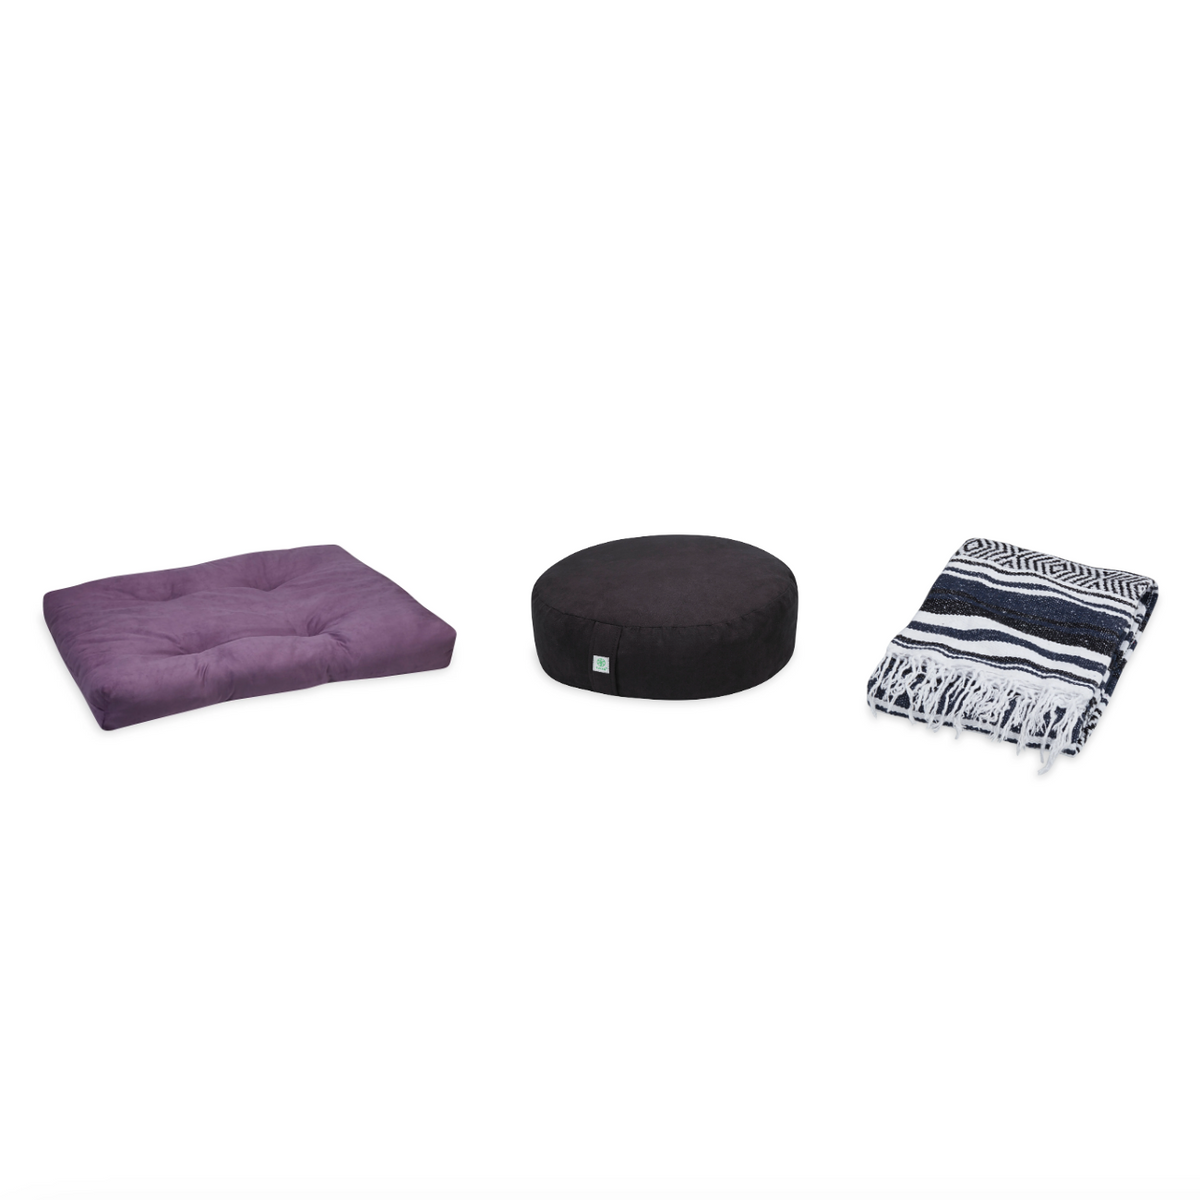 Meditation Bundle - Zabuton (Purple), Zafu (Black), Blanket (Navy/Black)